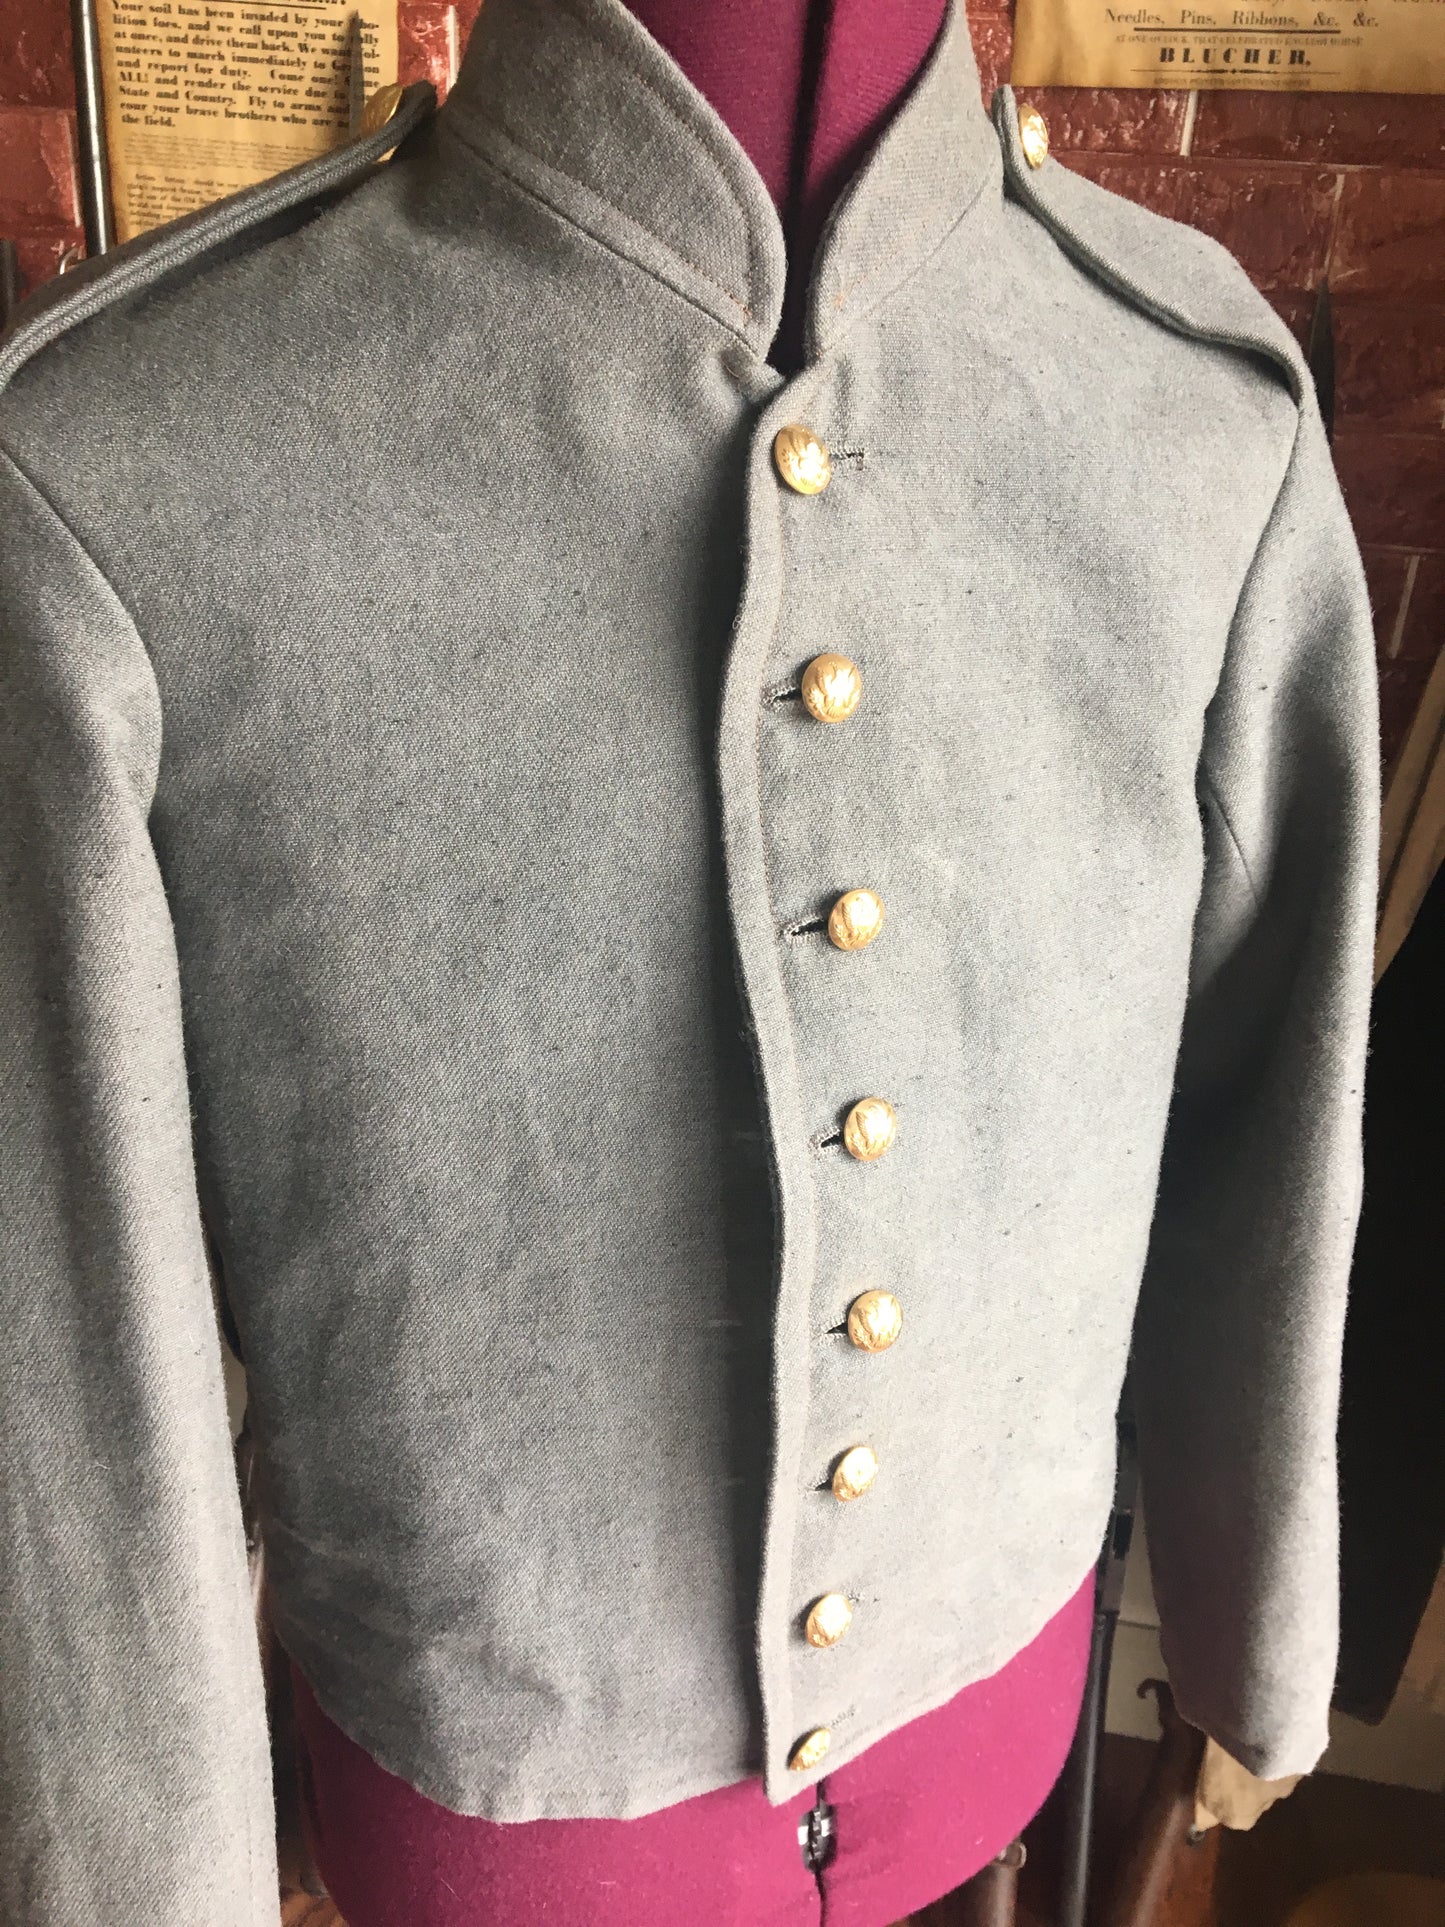 Richmond Clothing Bureau Jacket 1862-1863 Adler Variant